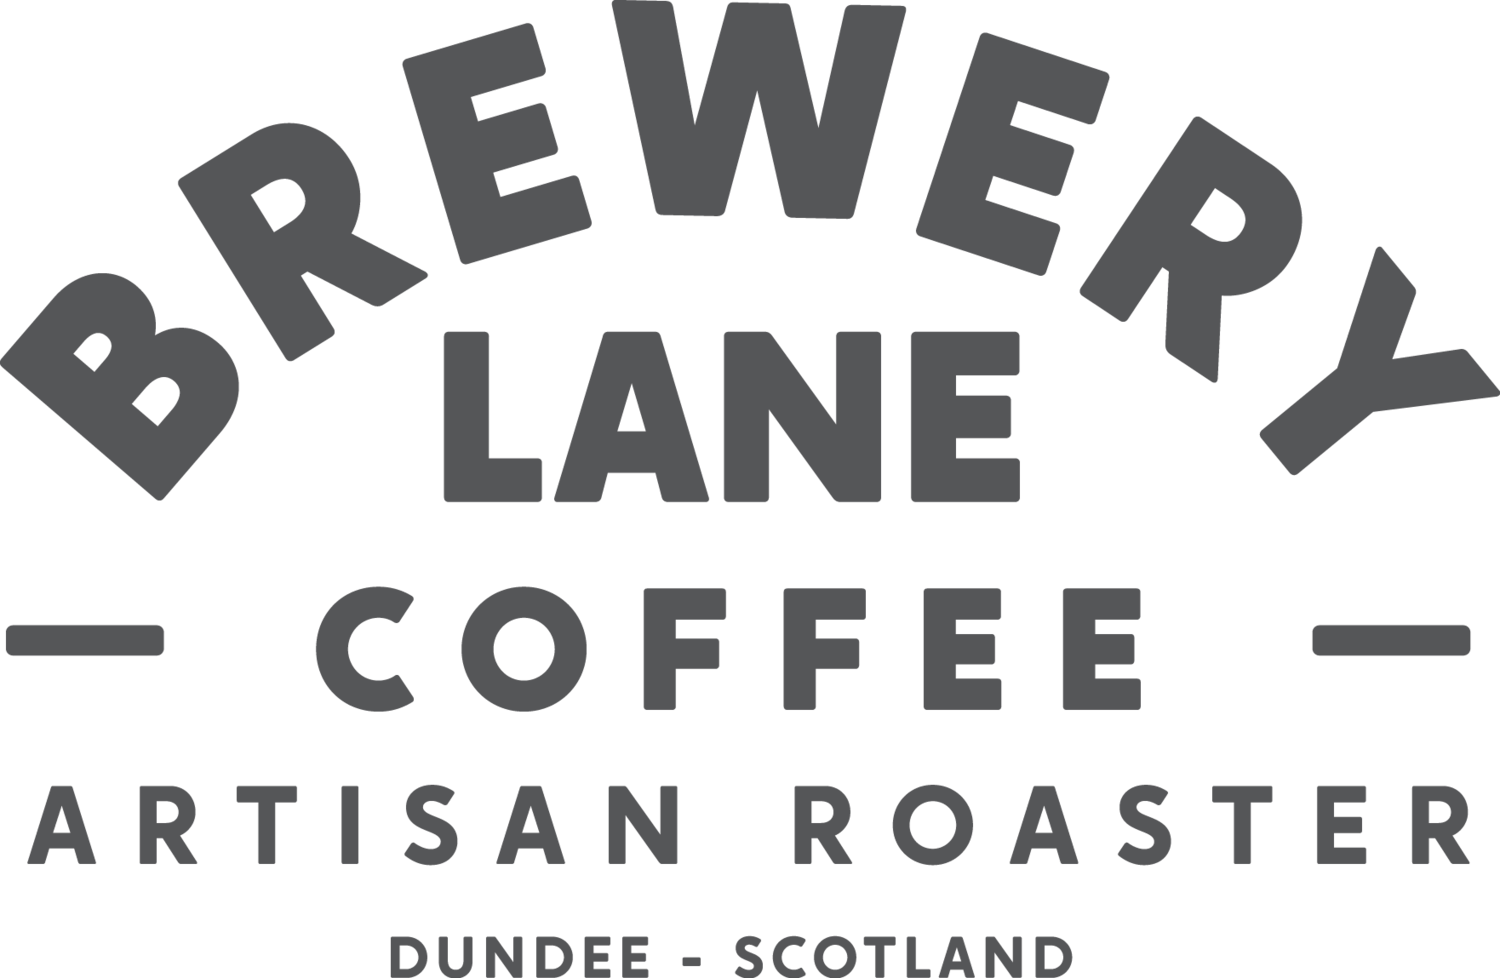 Brewery Lane Coffee